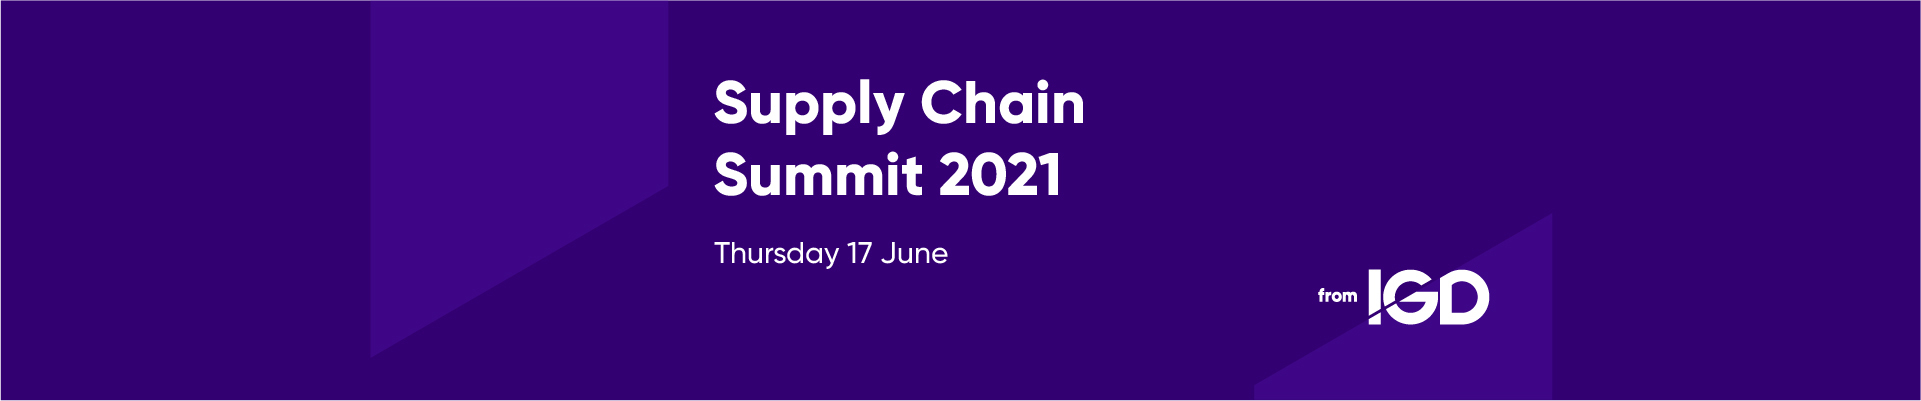 IGD Supply Chain Summit 2021